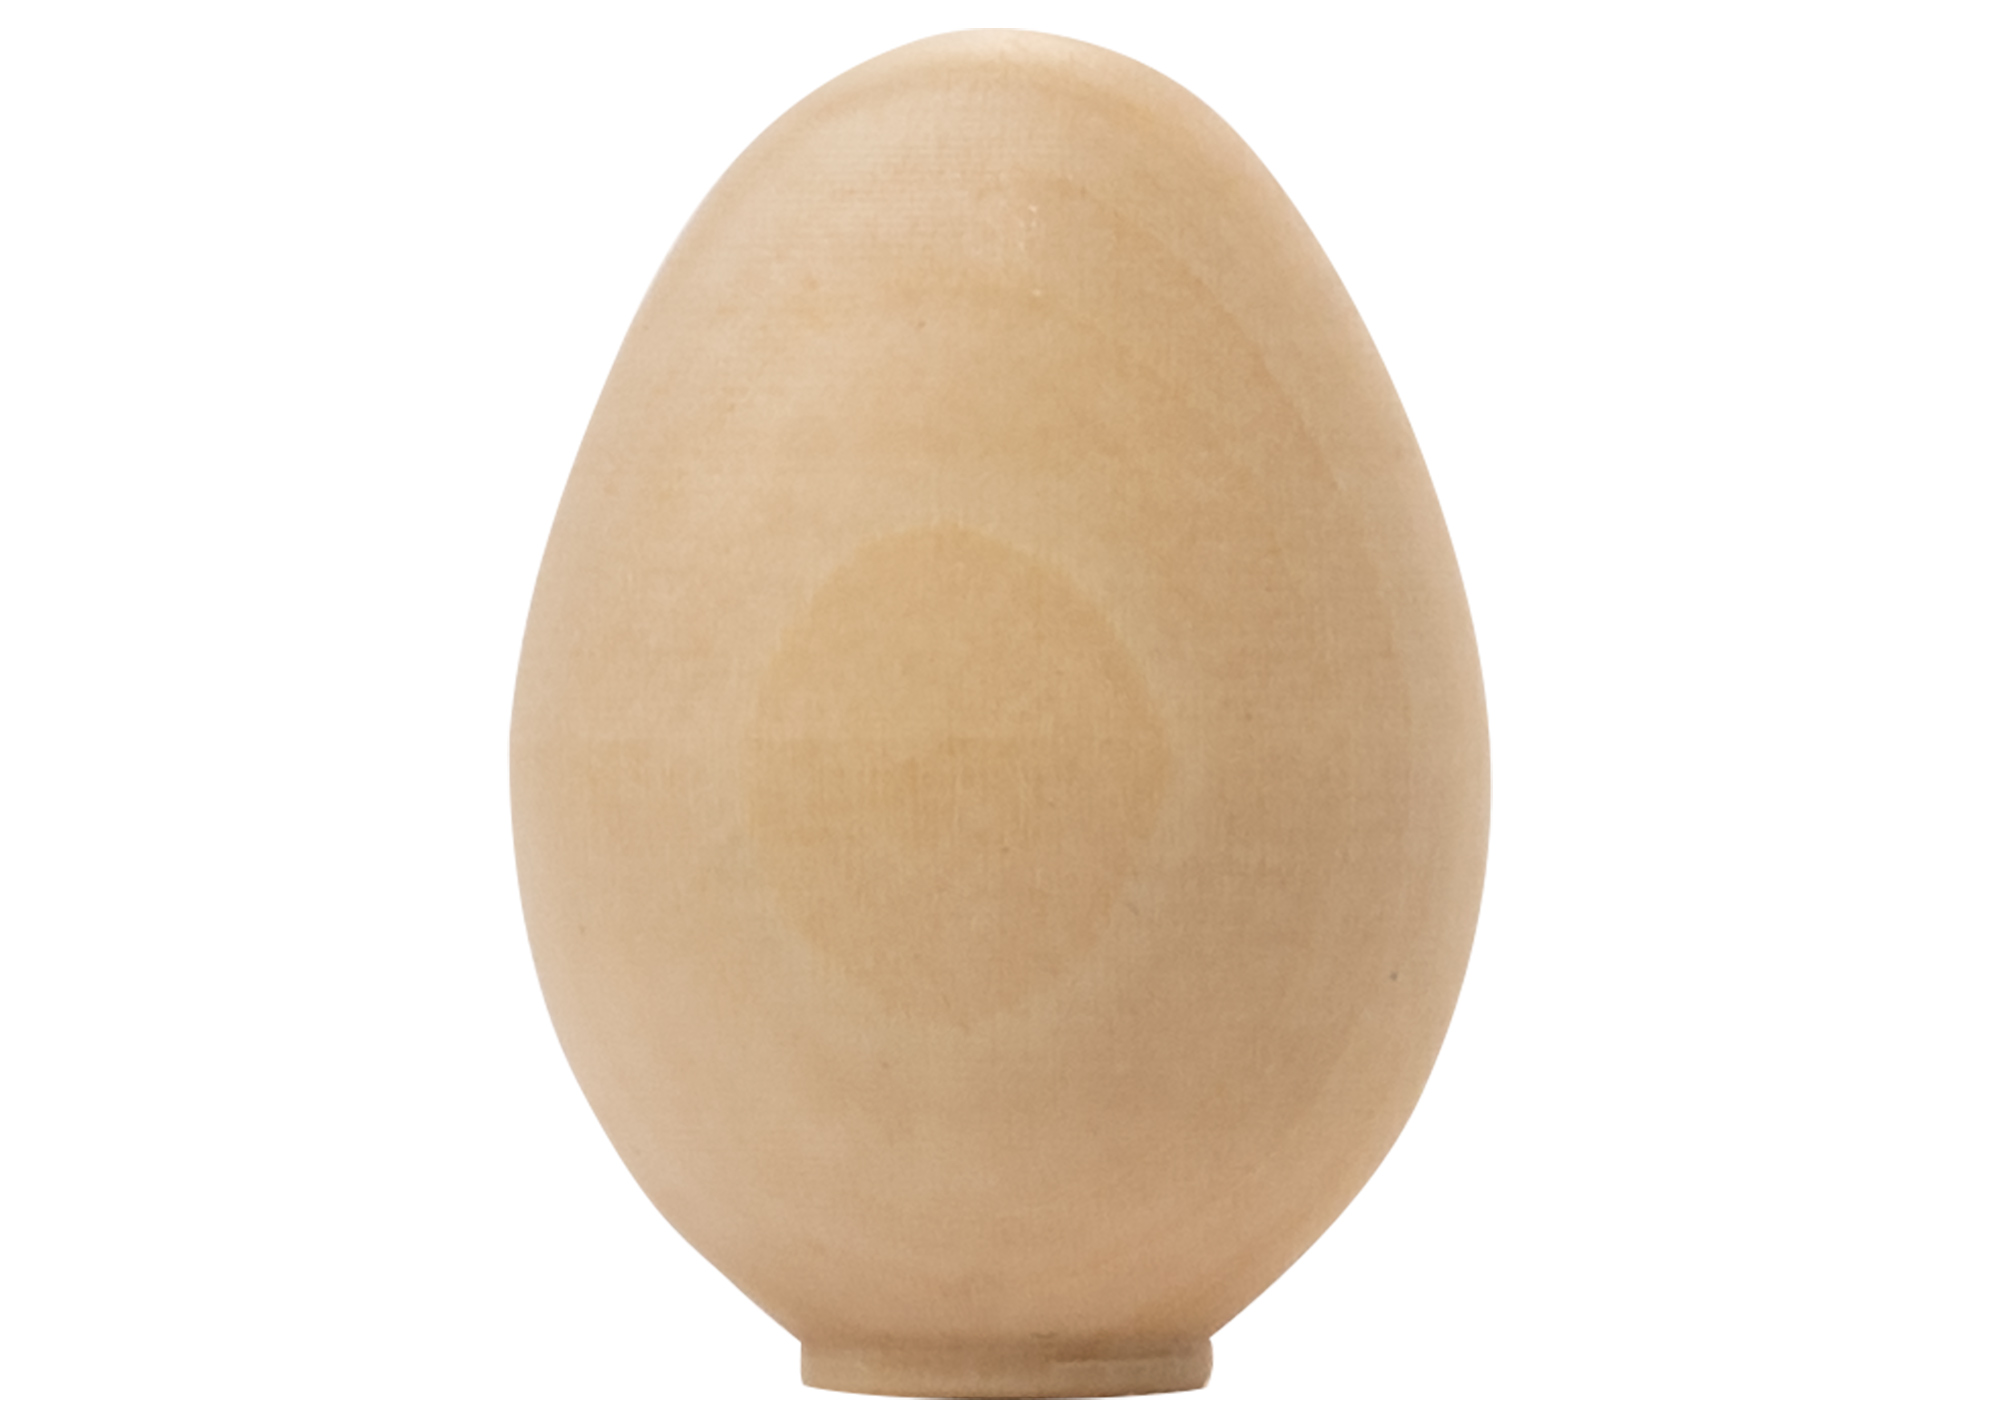 Buy Unpainted Wooden Bird Egg 2" at GoldenCockerel.com